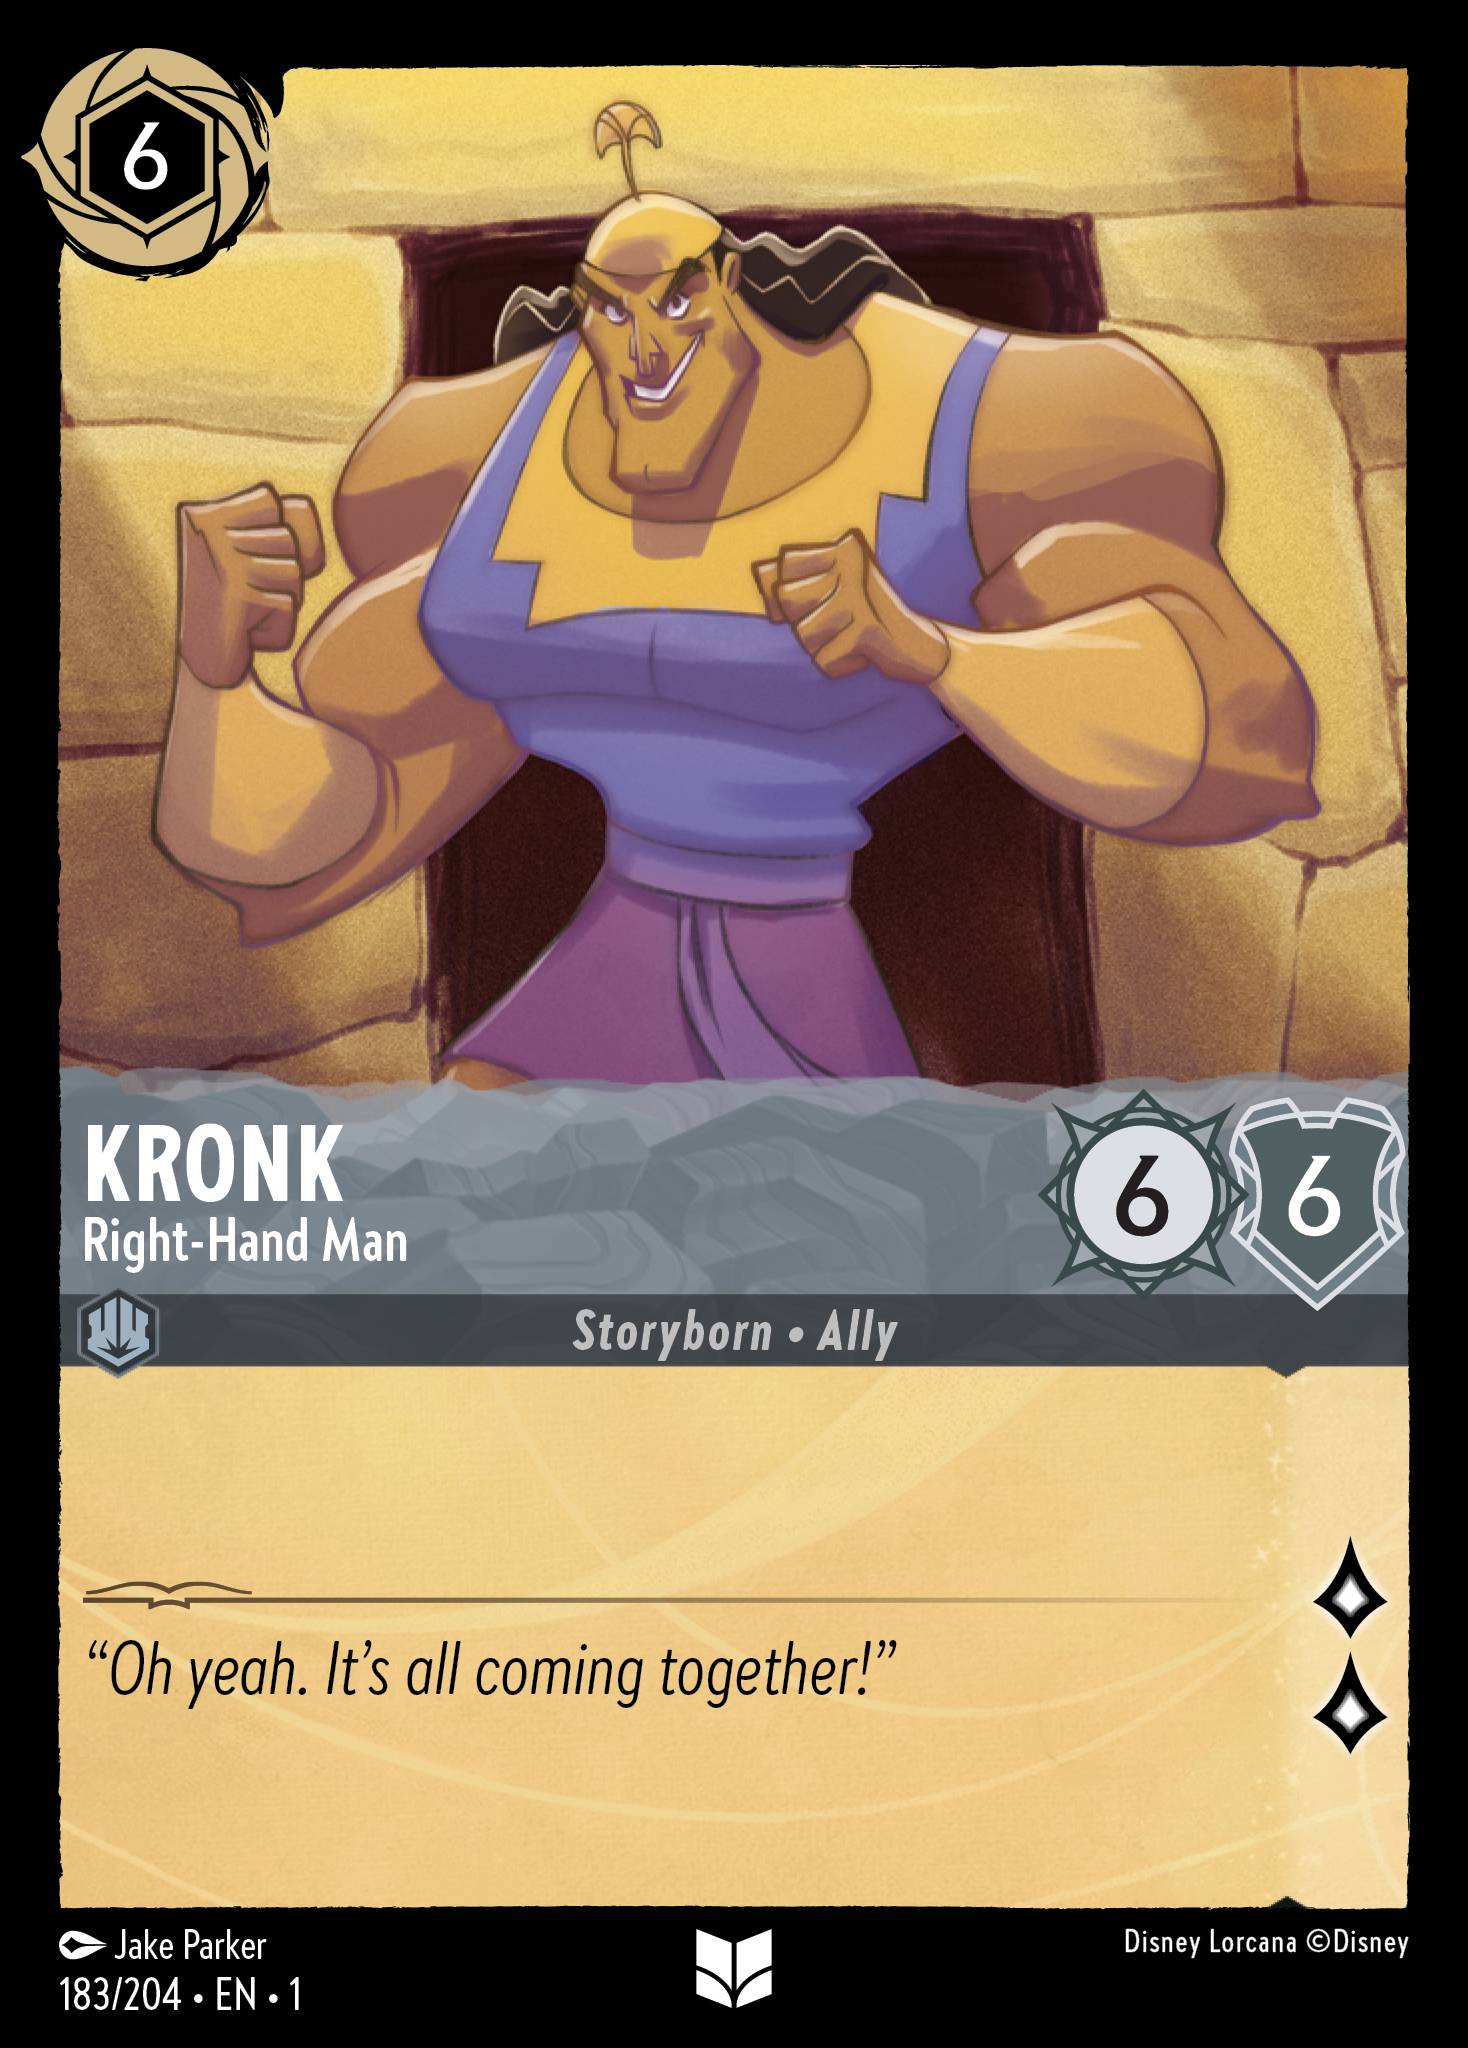 KRONK - Right-Hand Man